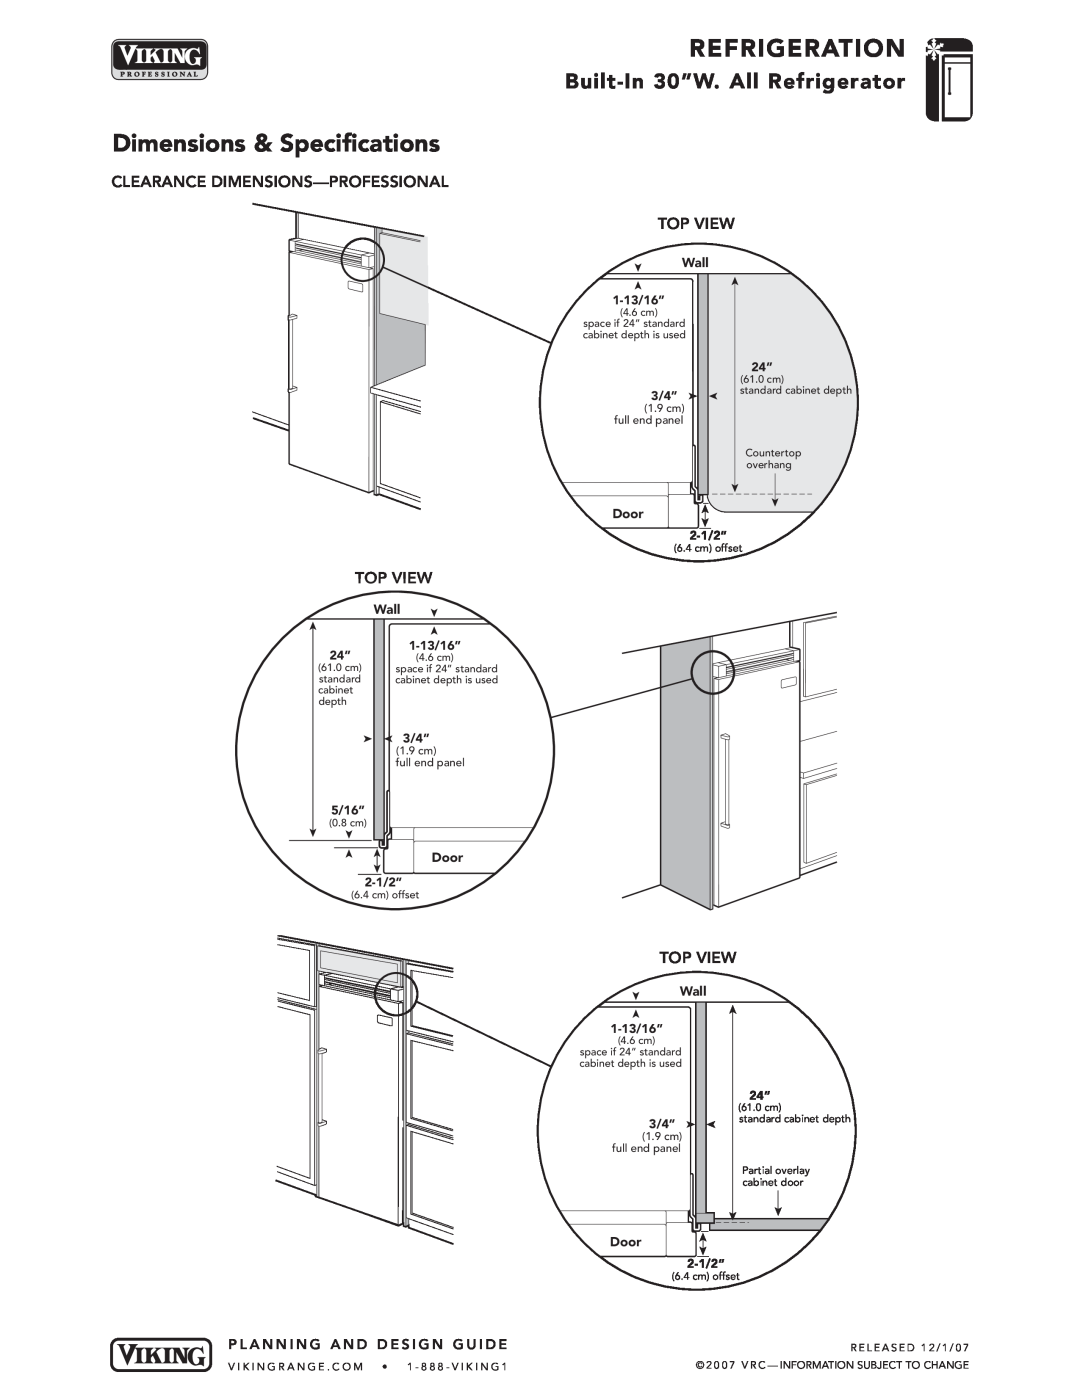 Viking DFRB304 Dimensions & Specifications, Refrigeration, Built-In 30”W. All Refrigerator, Wall, Door, 1-13/16”, 3/4” 